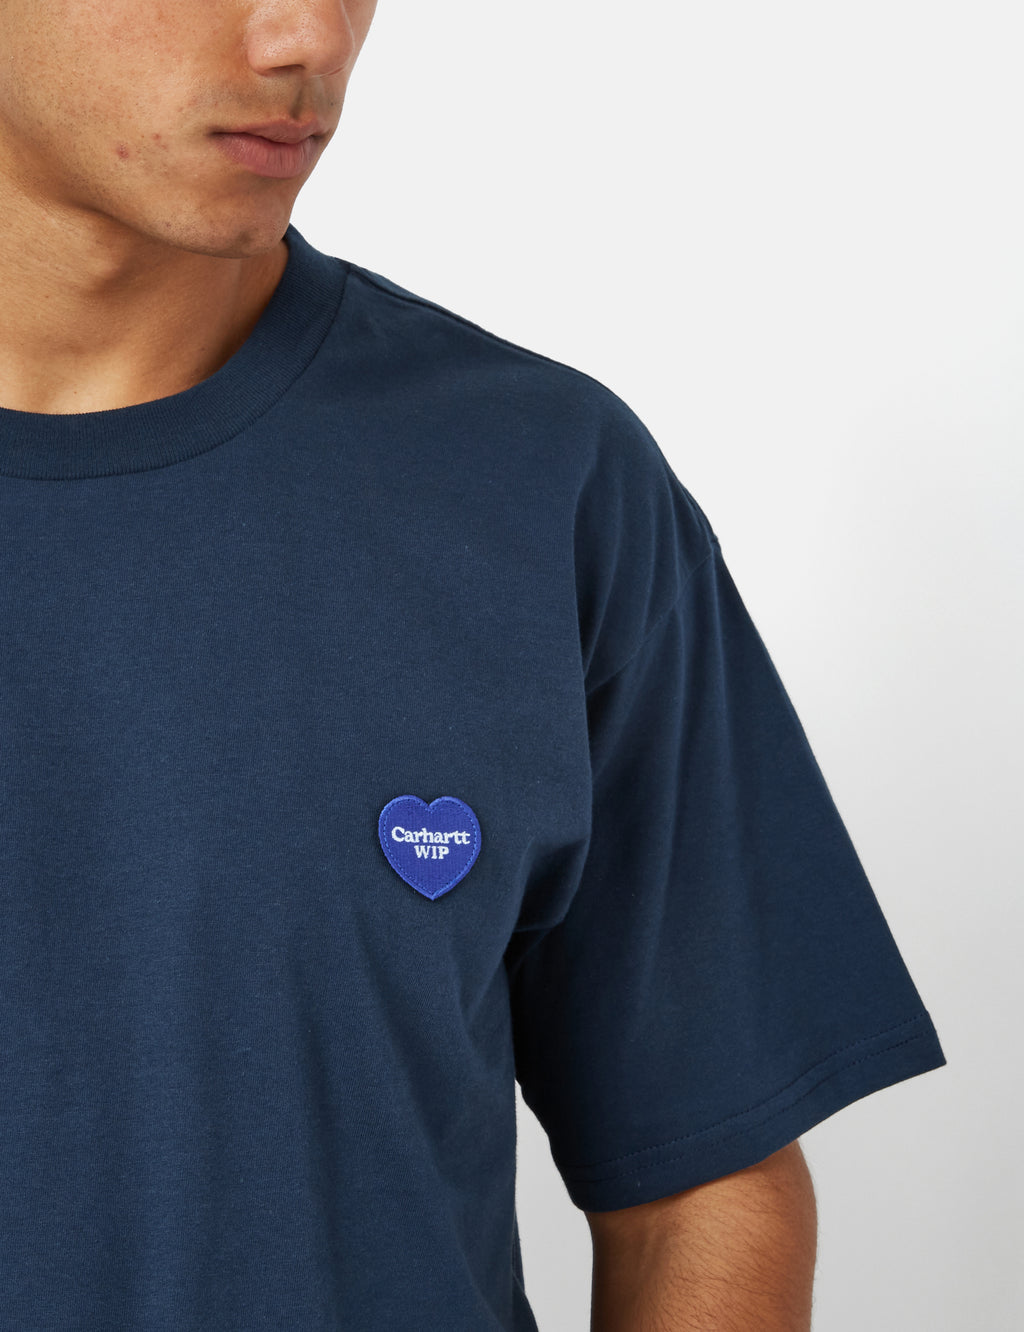 Carhartt-WIP T-Shirt Urban Excess. URBAN Heart - EXCESS – (Organic) Double Blue I